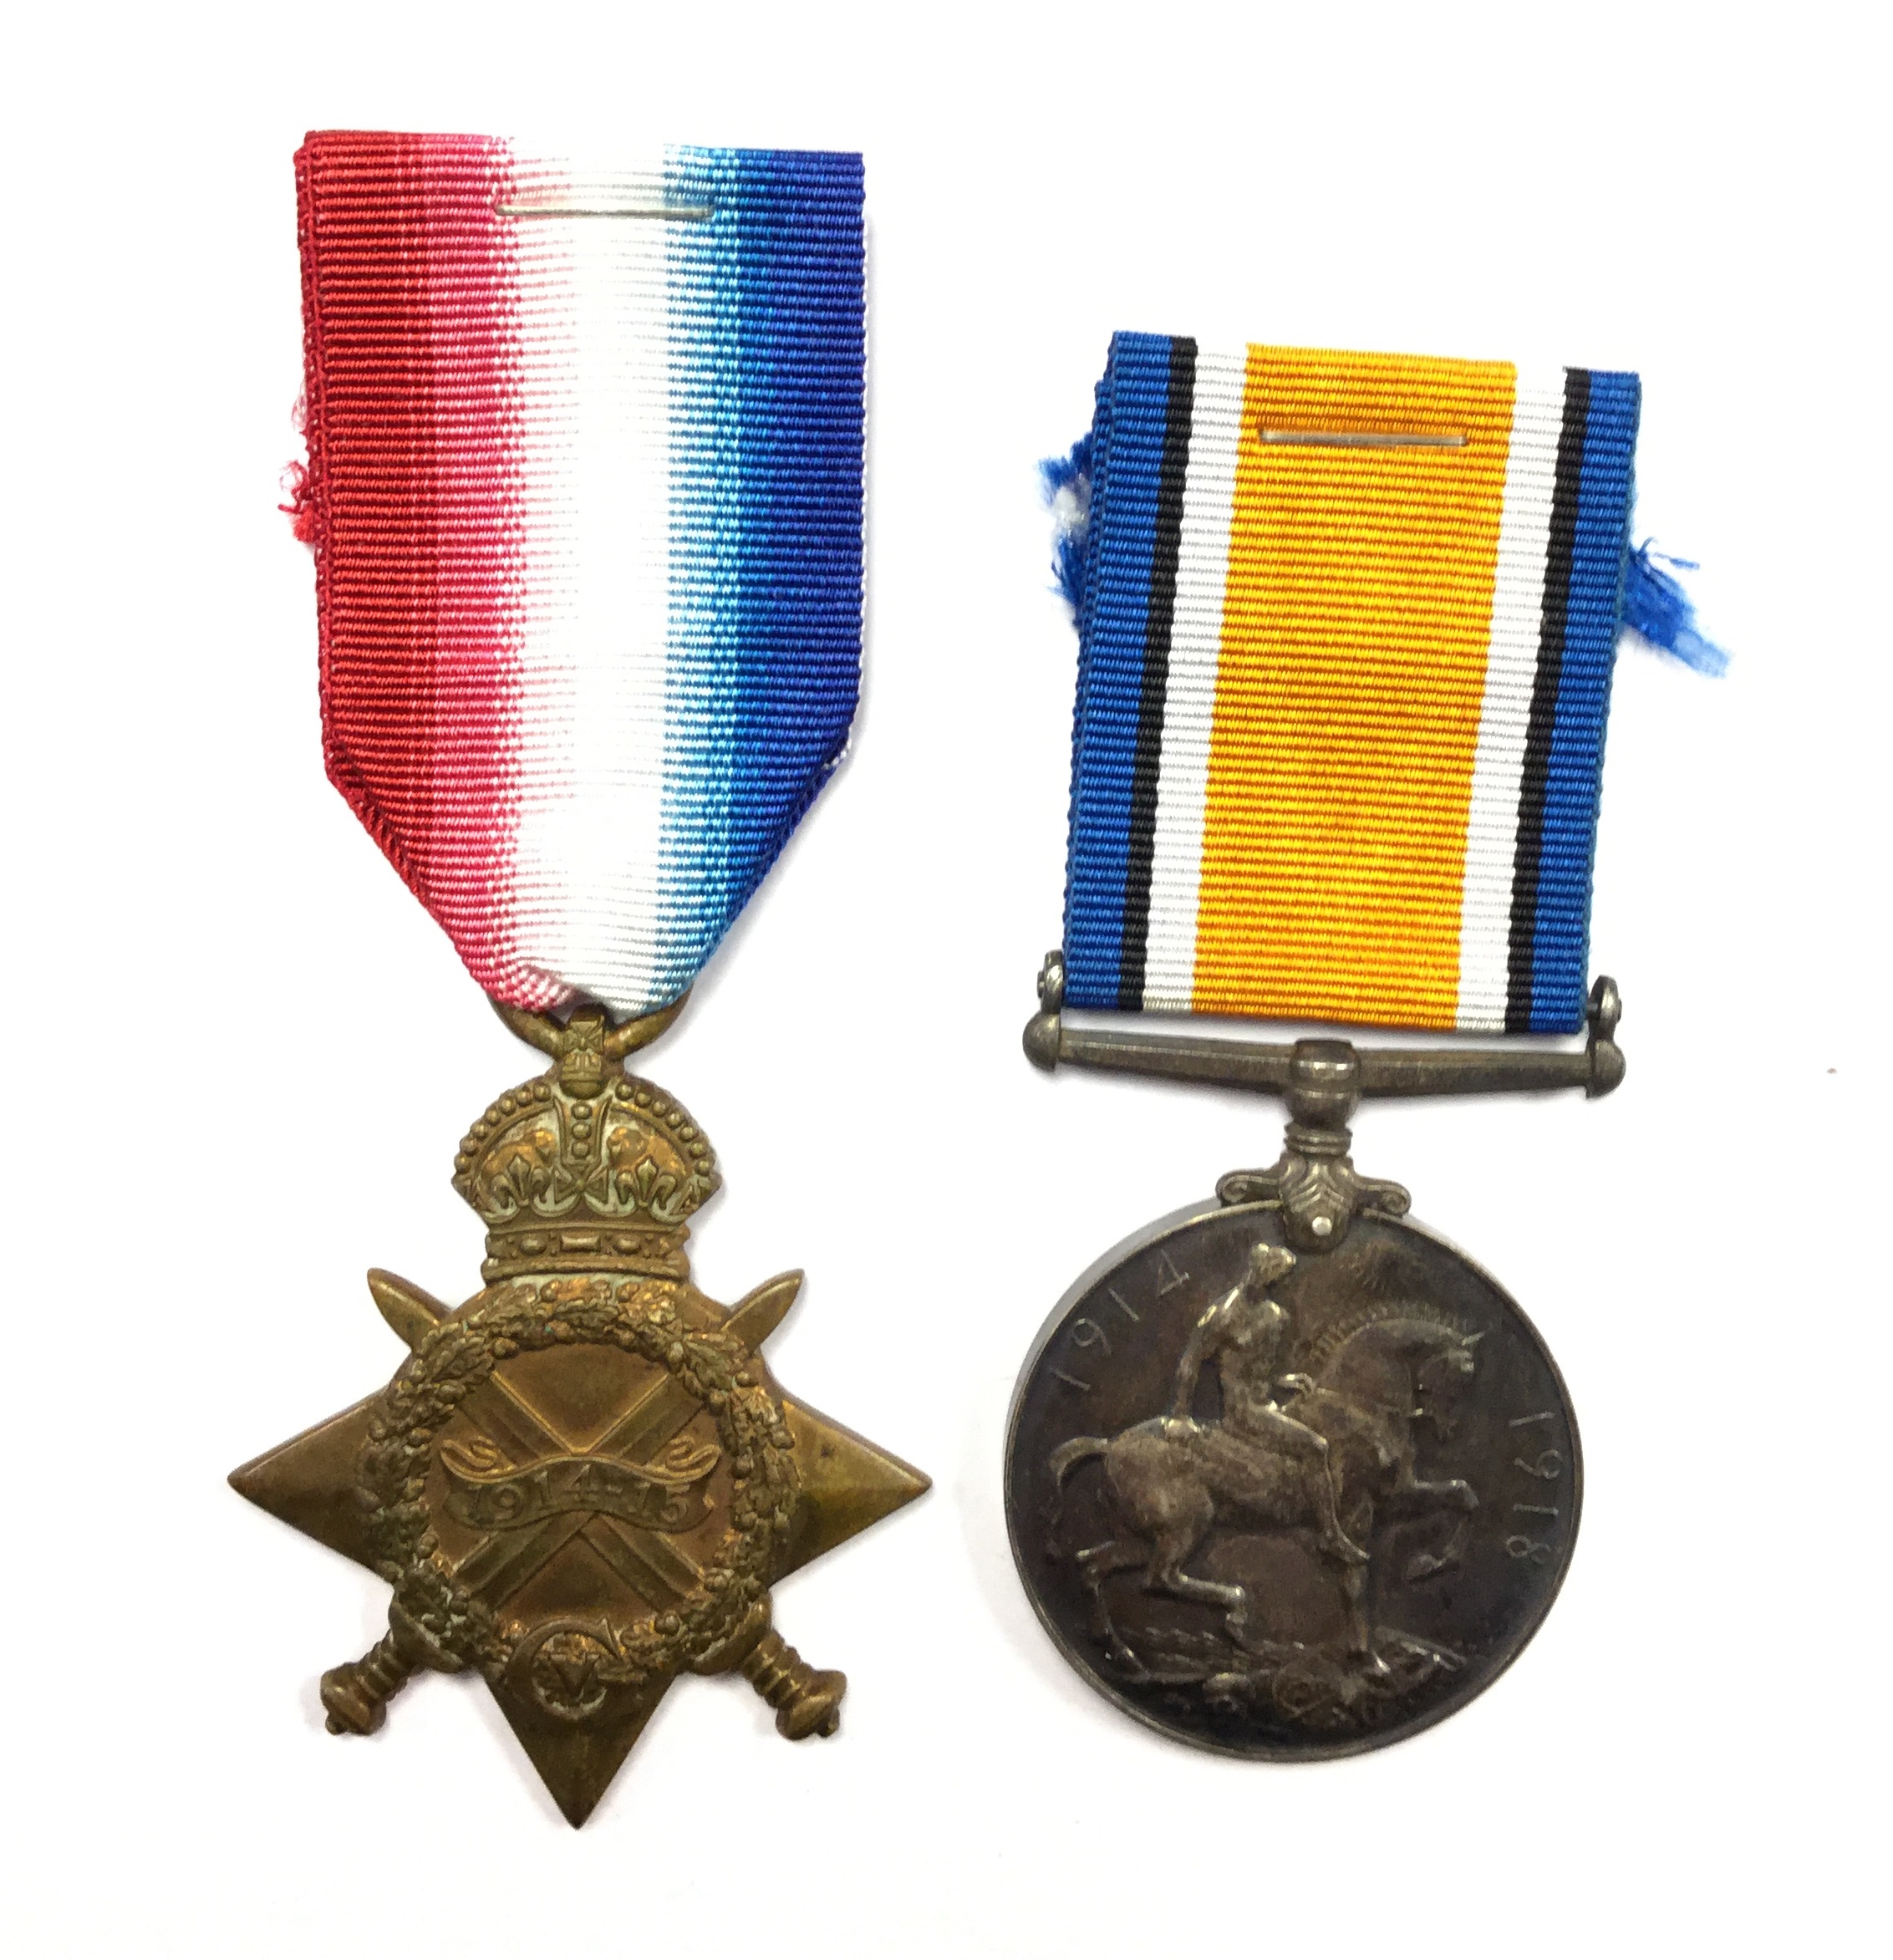 WW1 British 1914-15 Star and British War Medal to 42801 Gunner T Griffies, Royal Garrison Artillery.